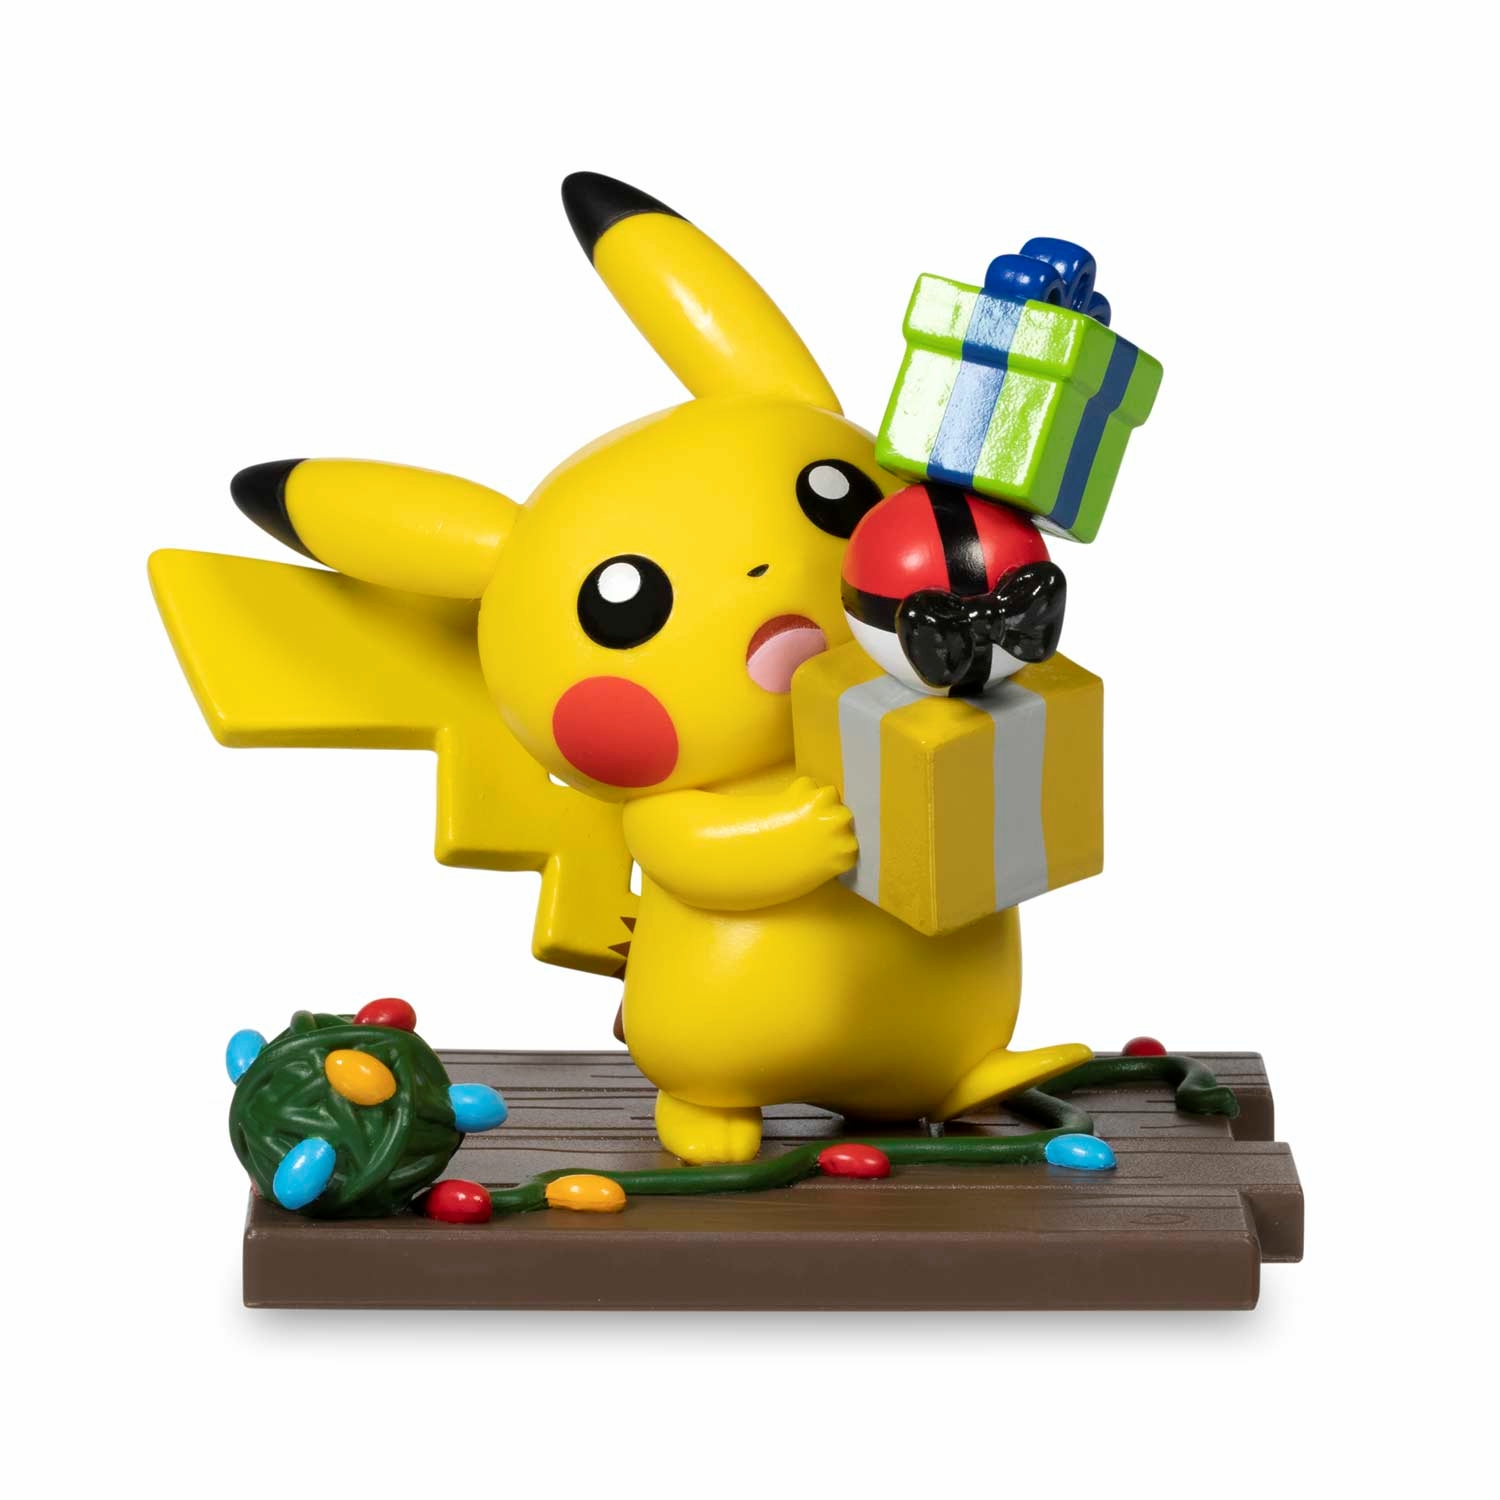 Pokemon_Holiday_Pikachu_Figure_by_Funko_Product_Image.jpg